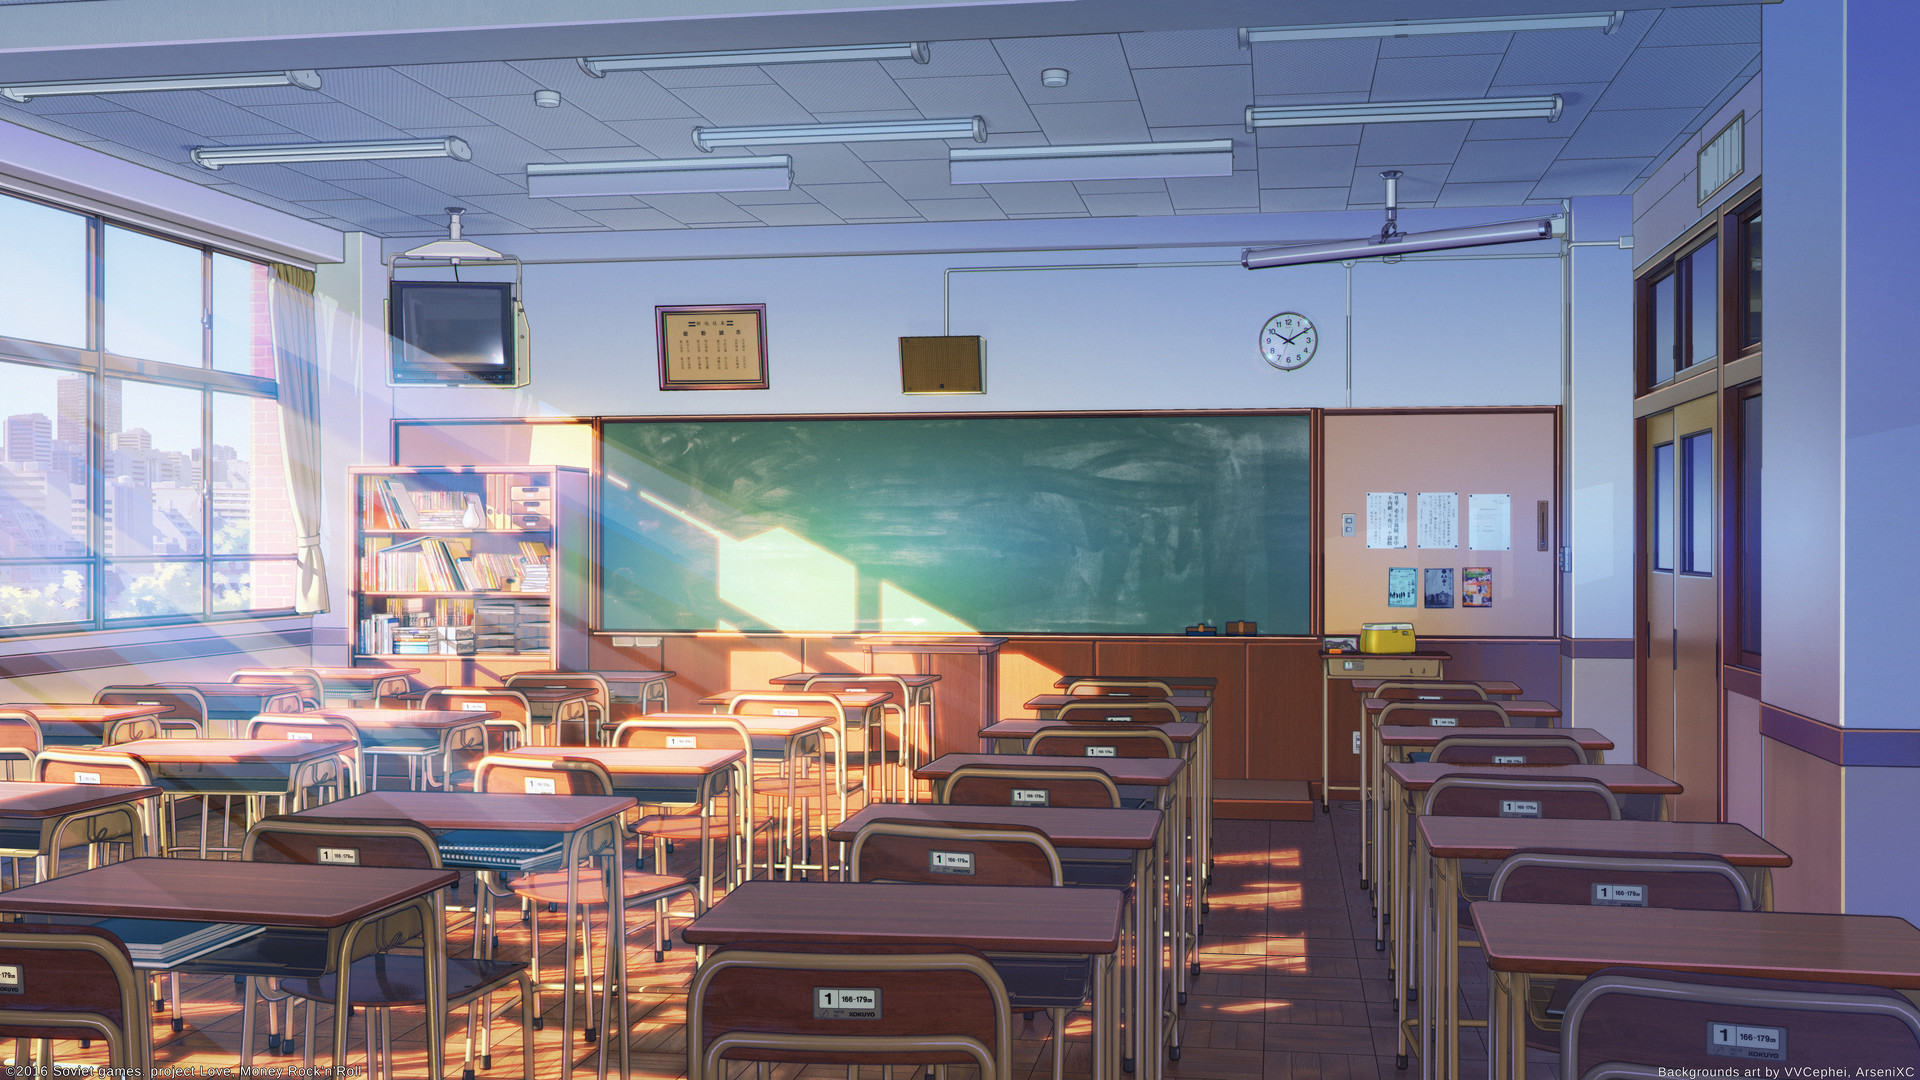 ArtStation - Anime Classroom